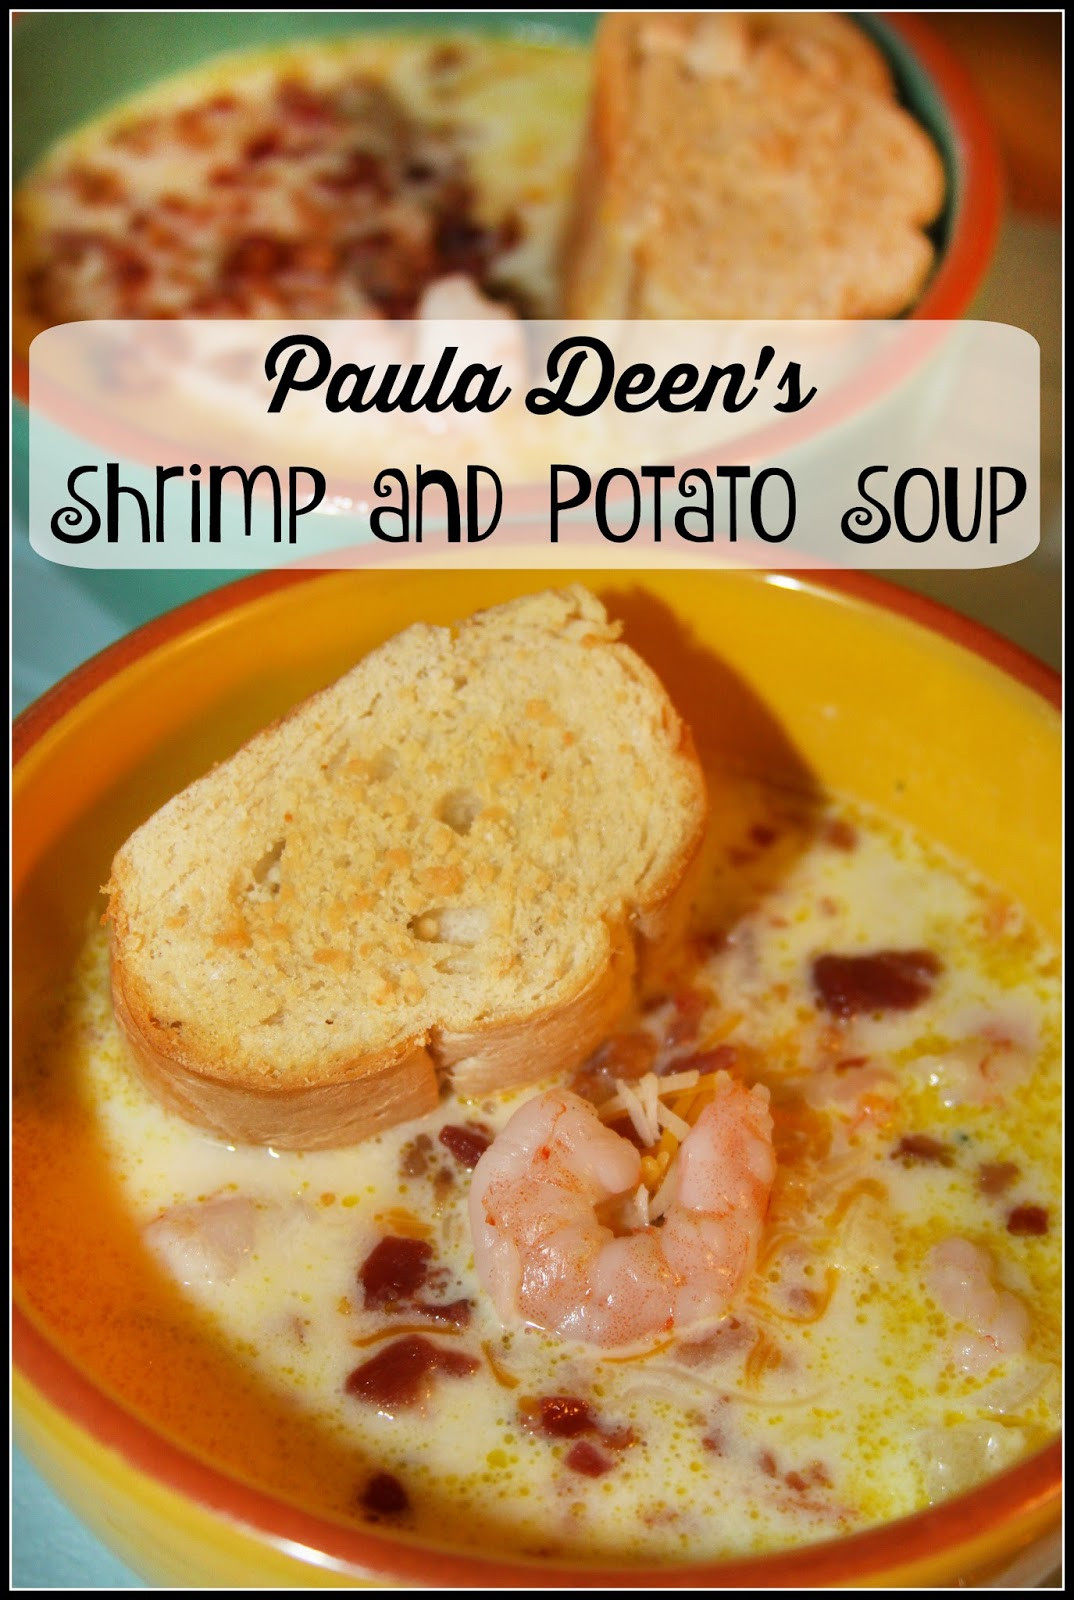 Paula Deen Potato Soup
 For the Love of Food Paula Deen s Shrimp and Potato Soup